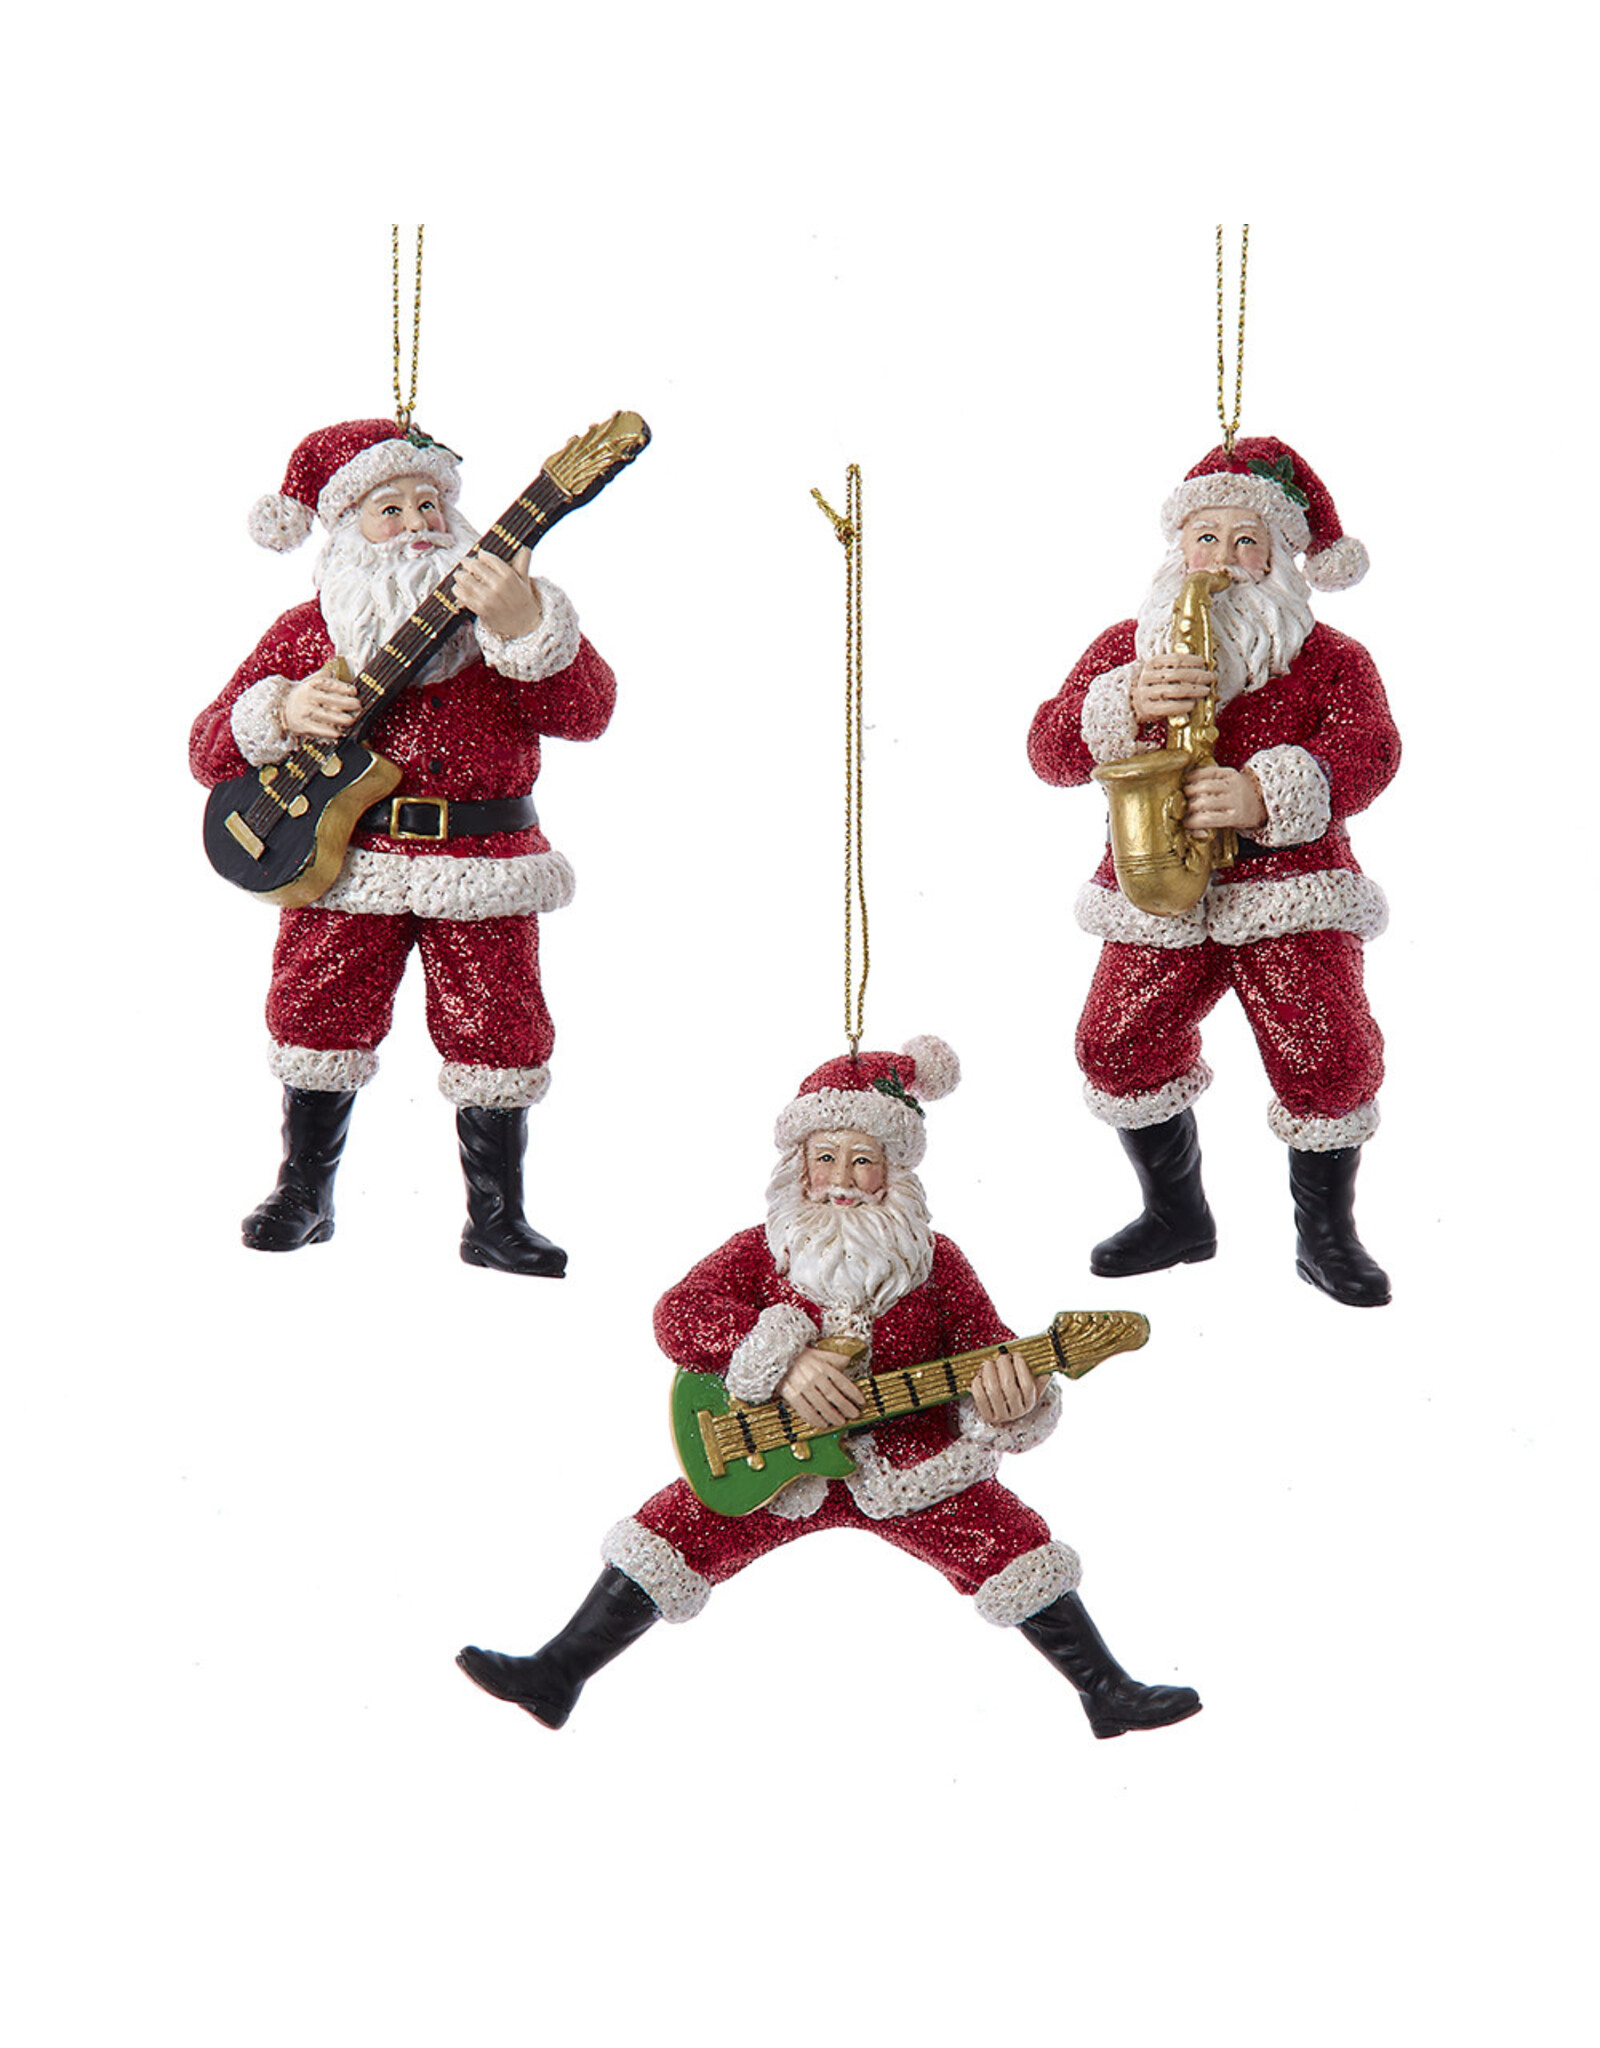 Kurt Adler Santas Playing Music Instruments Ornaments 3pc Set